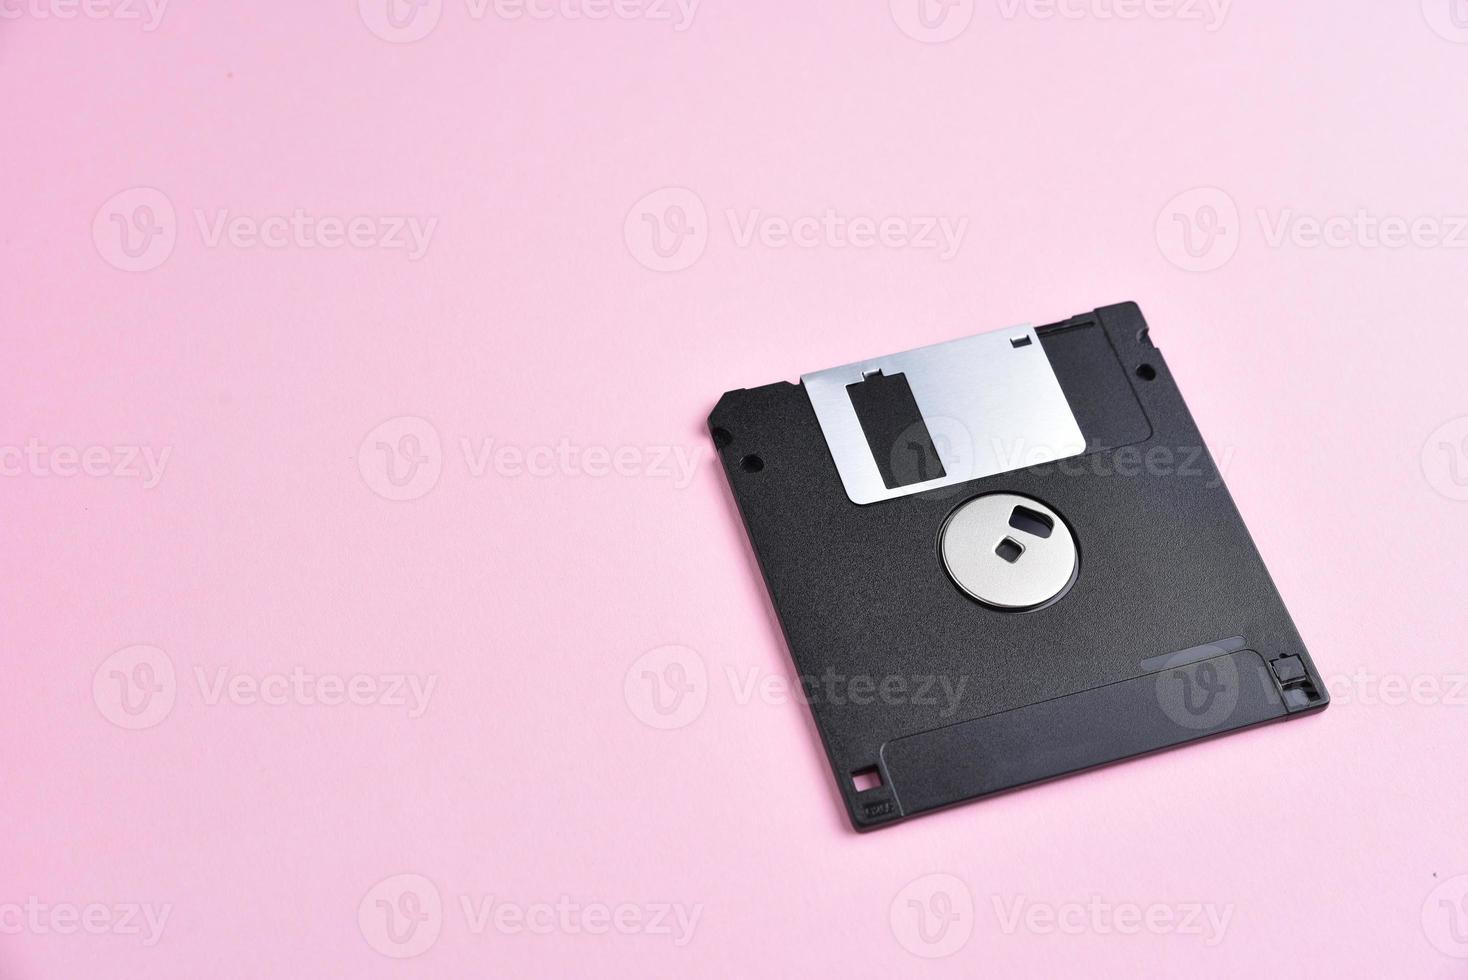 Floppy disk on pink background photo